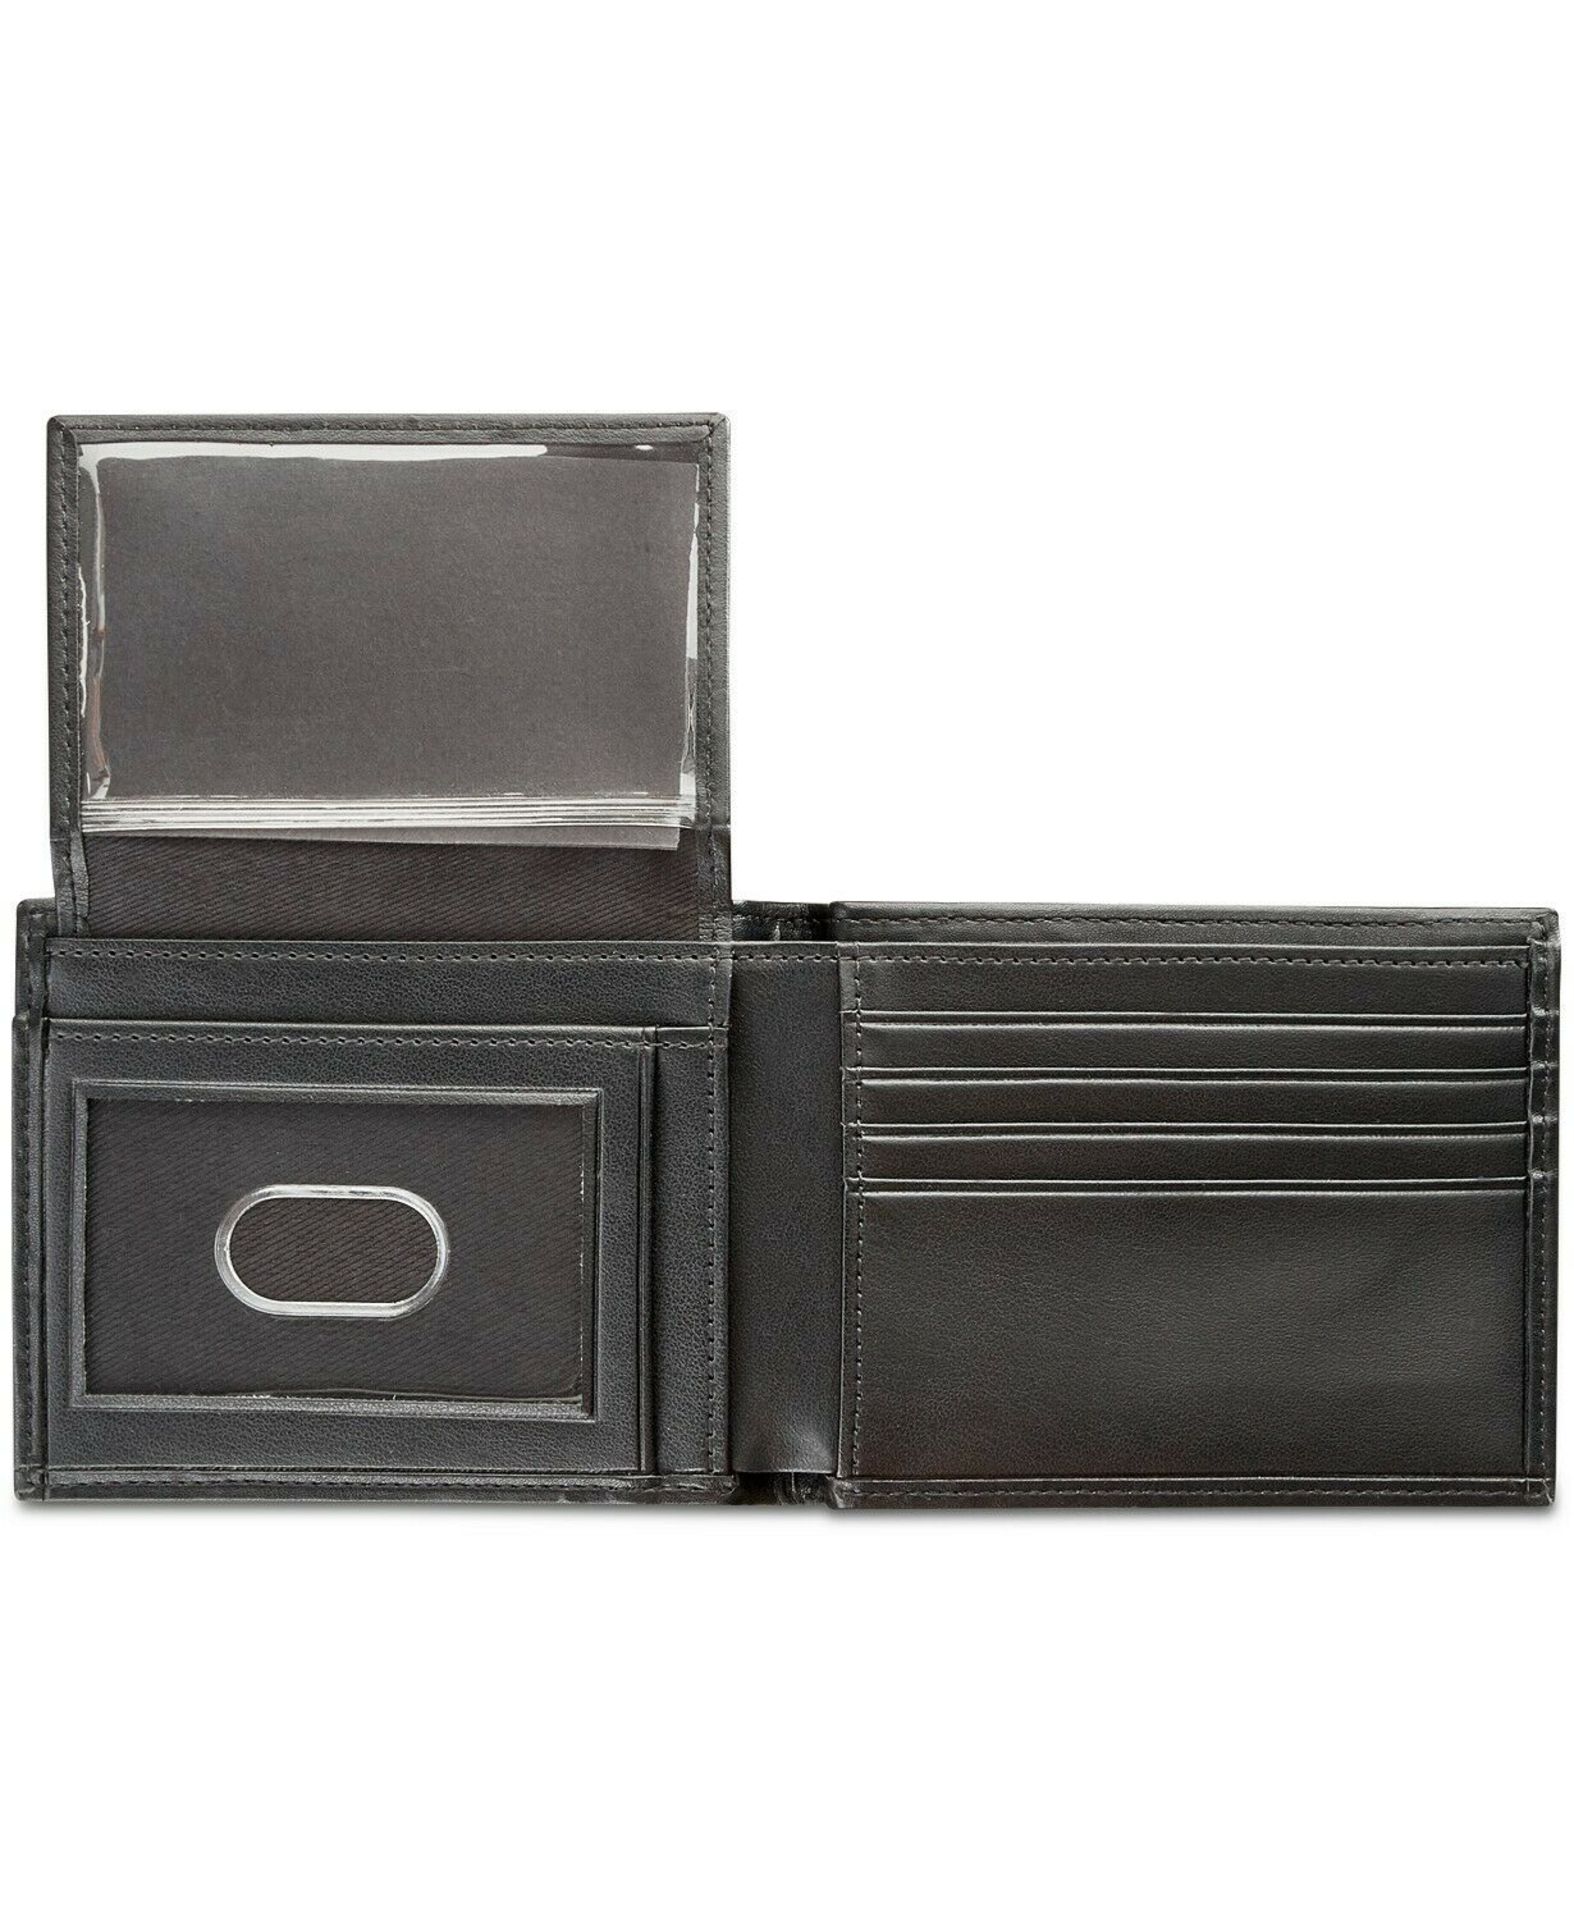 Perry Ellis Men's Wallet Black Manhattan Smooth Leather Bifold Passcase Rrp £35 - Image 3 of 3